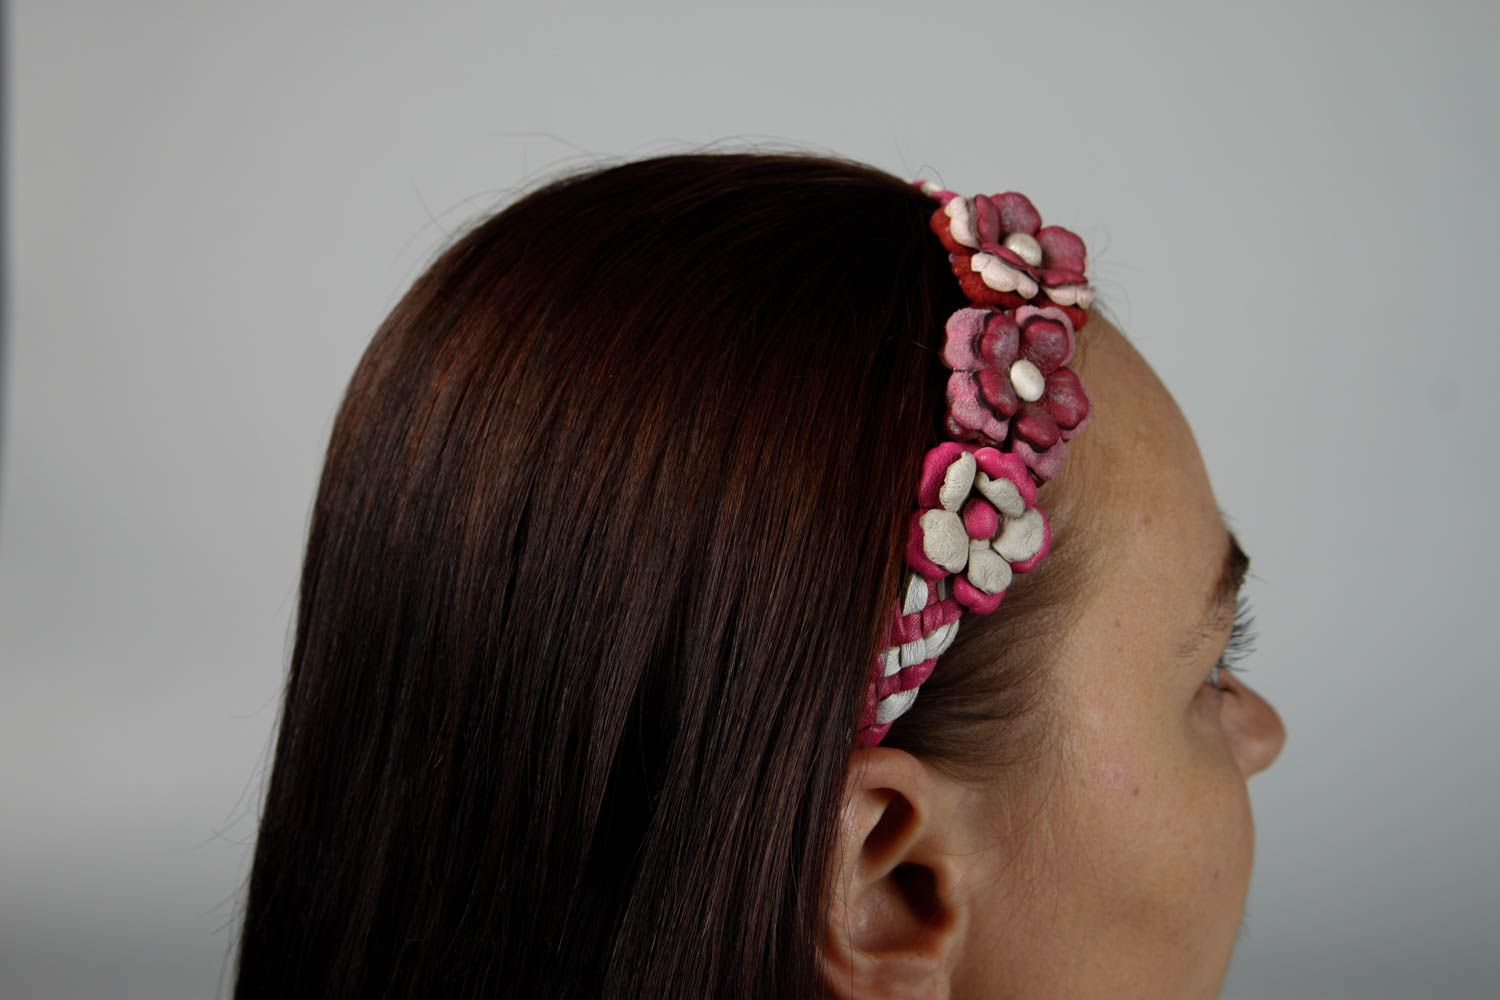 Stylish handmade flower headband leather goods fashion accessories for girls photo 1